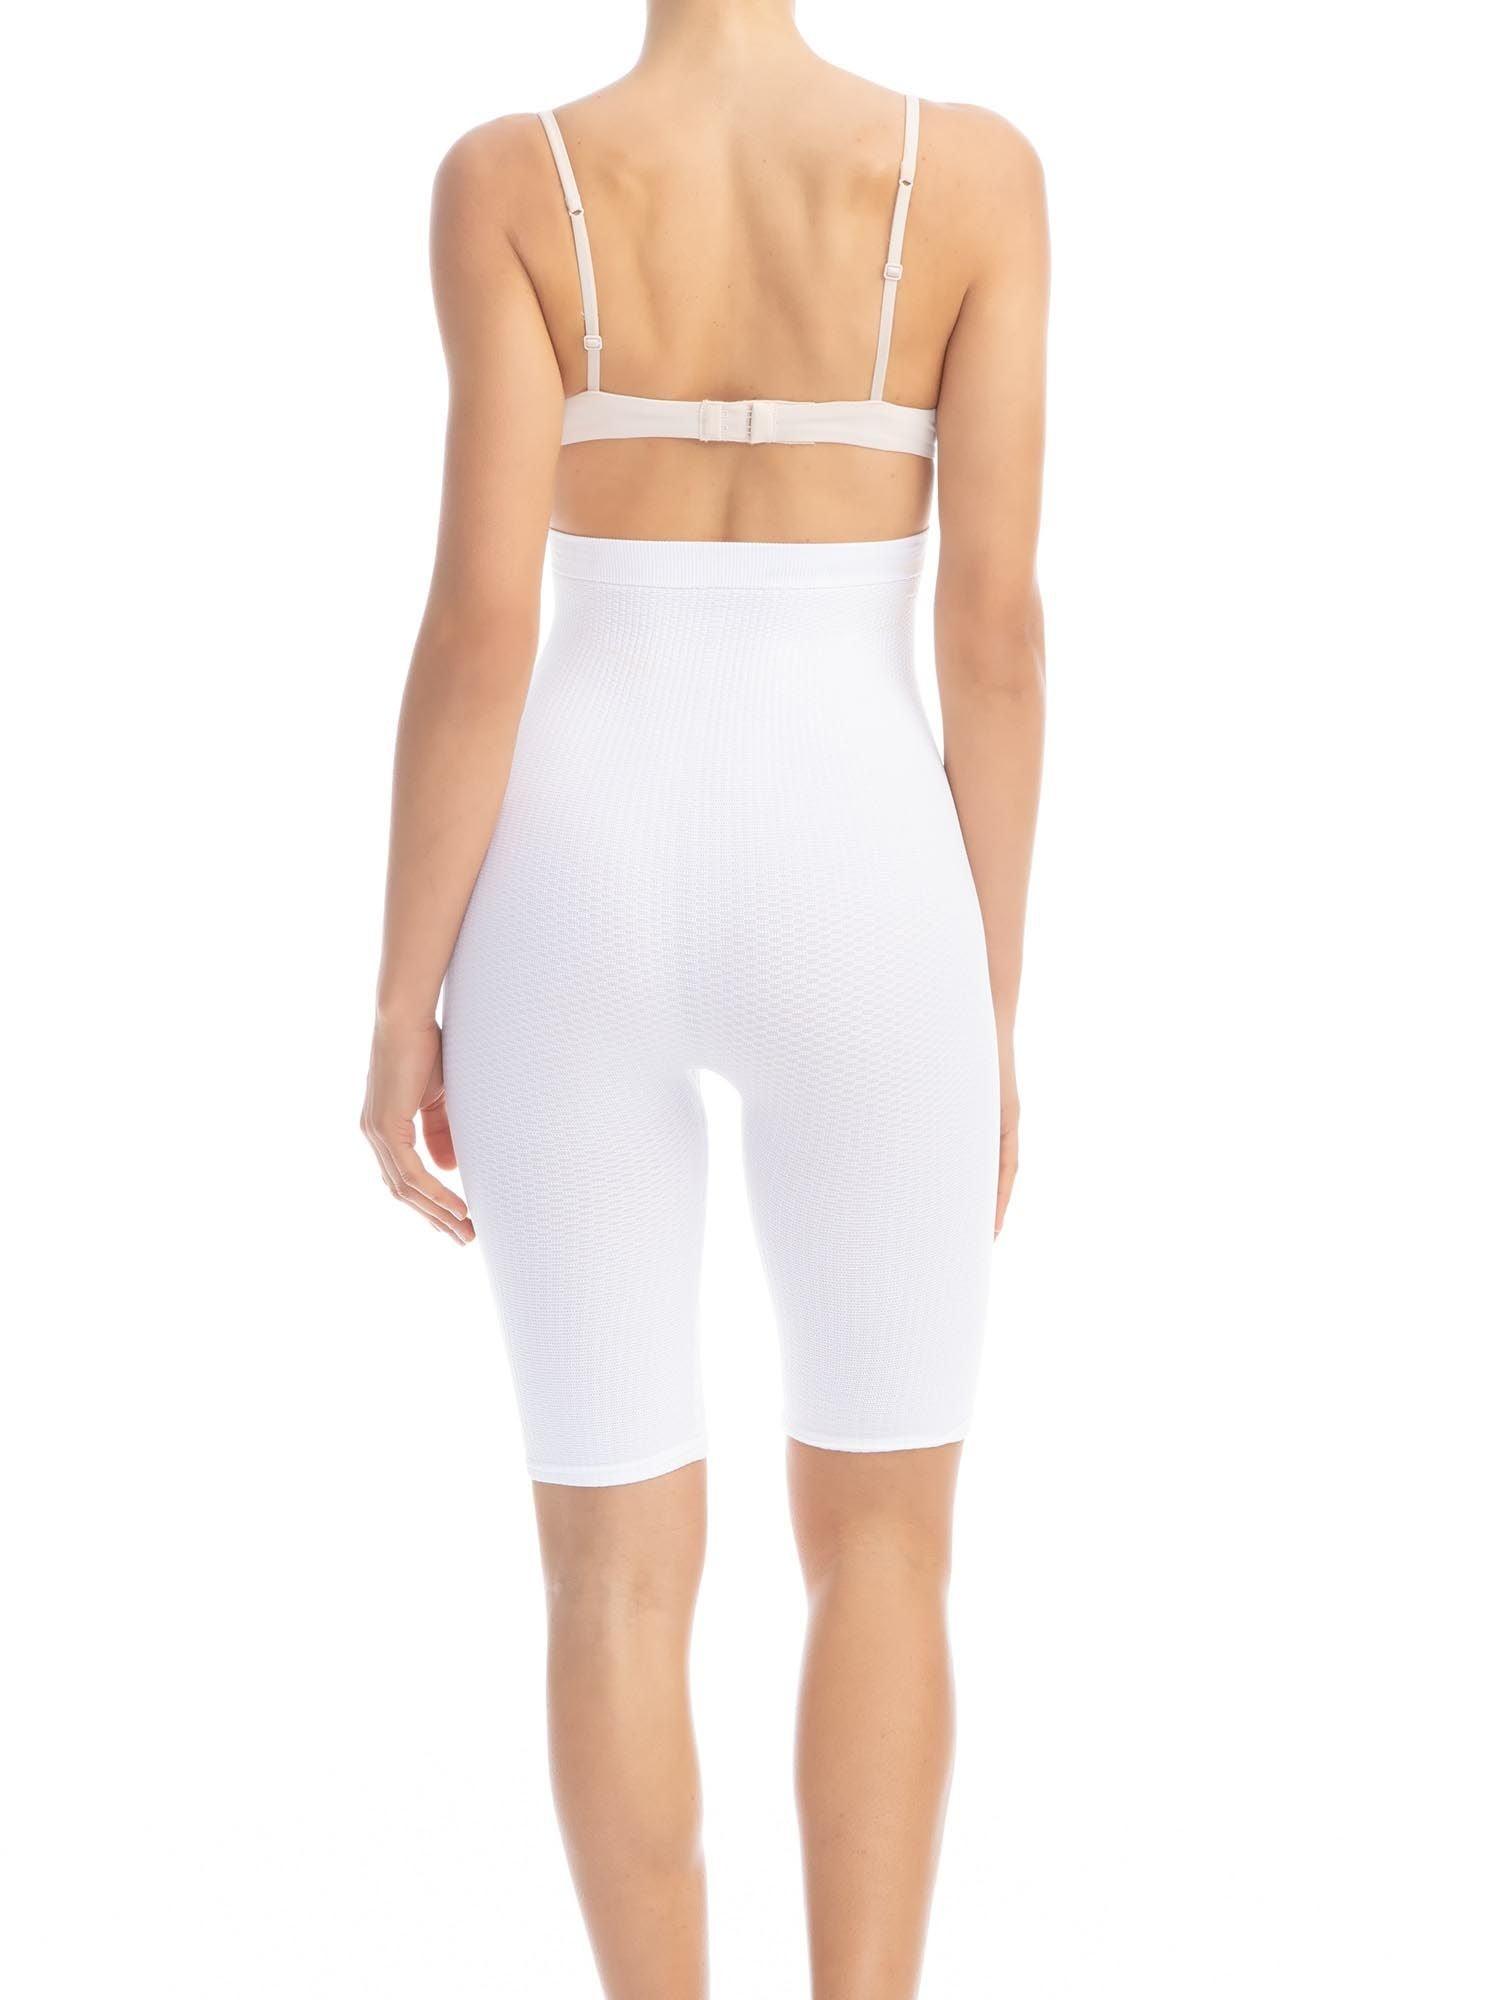 Women's high-waisted anti-cellulite micromassage shorts - Wellness Shoppee